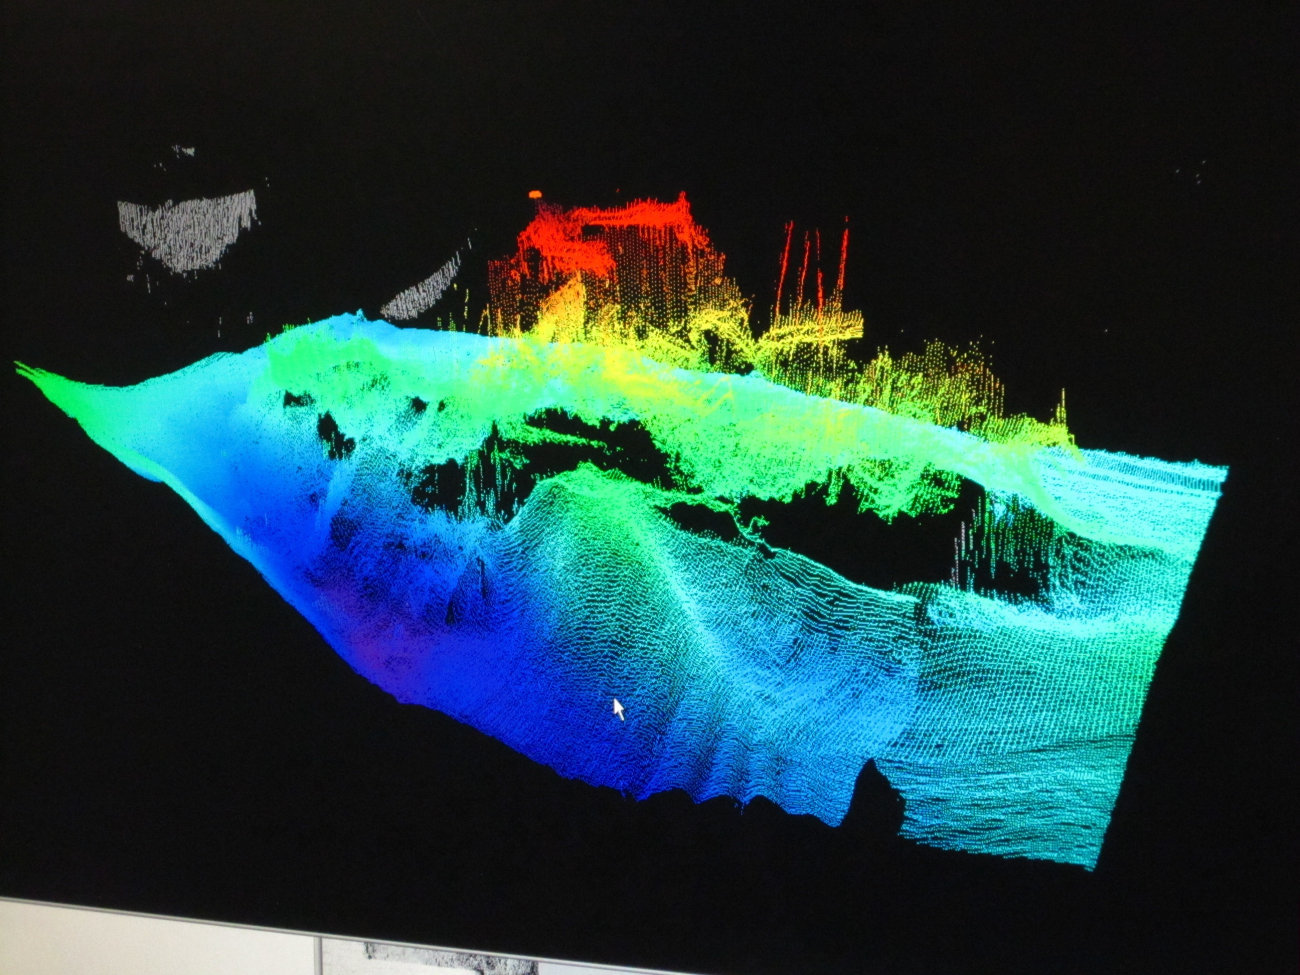 Multi-beam imagery of sunken vessel